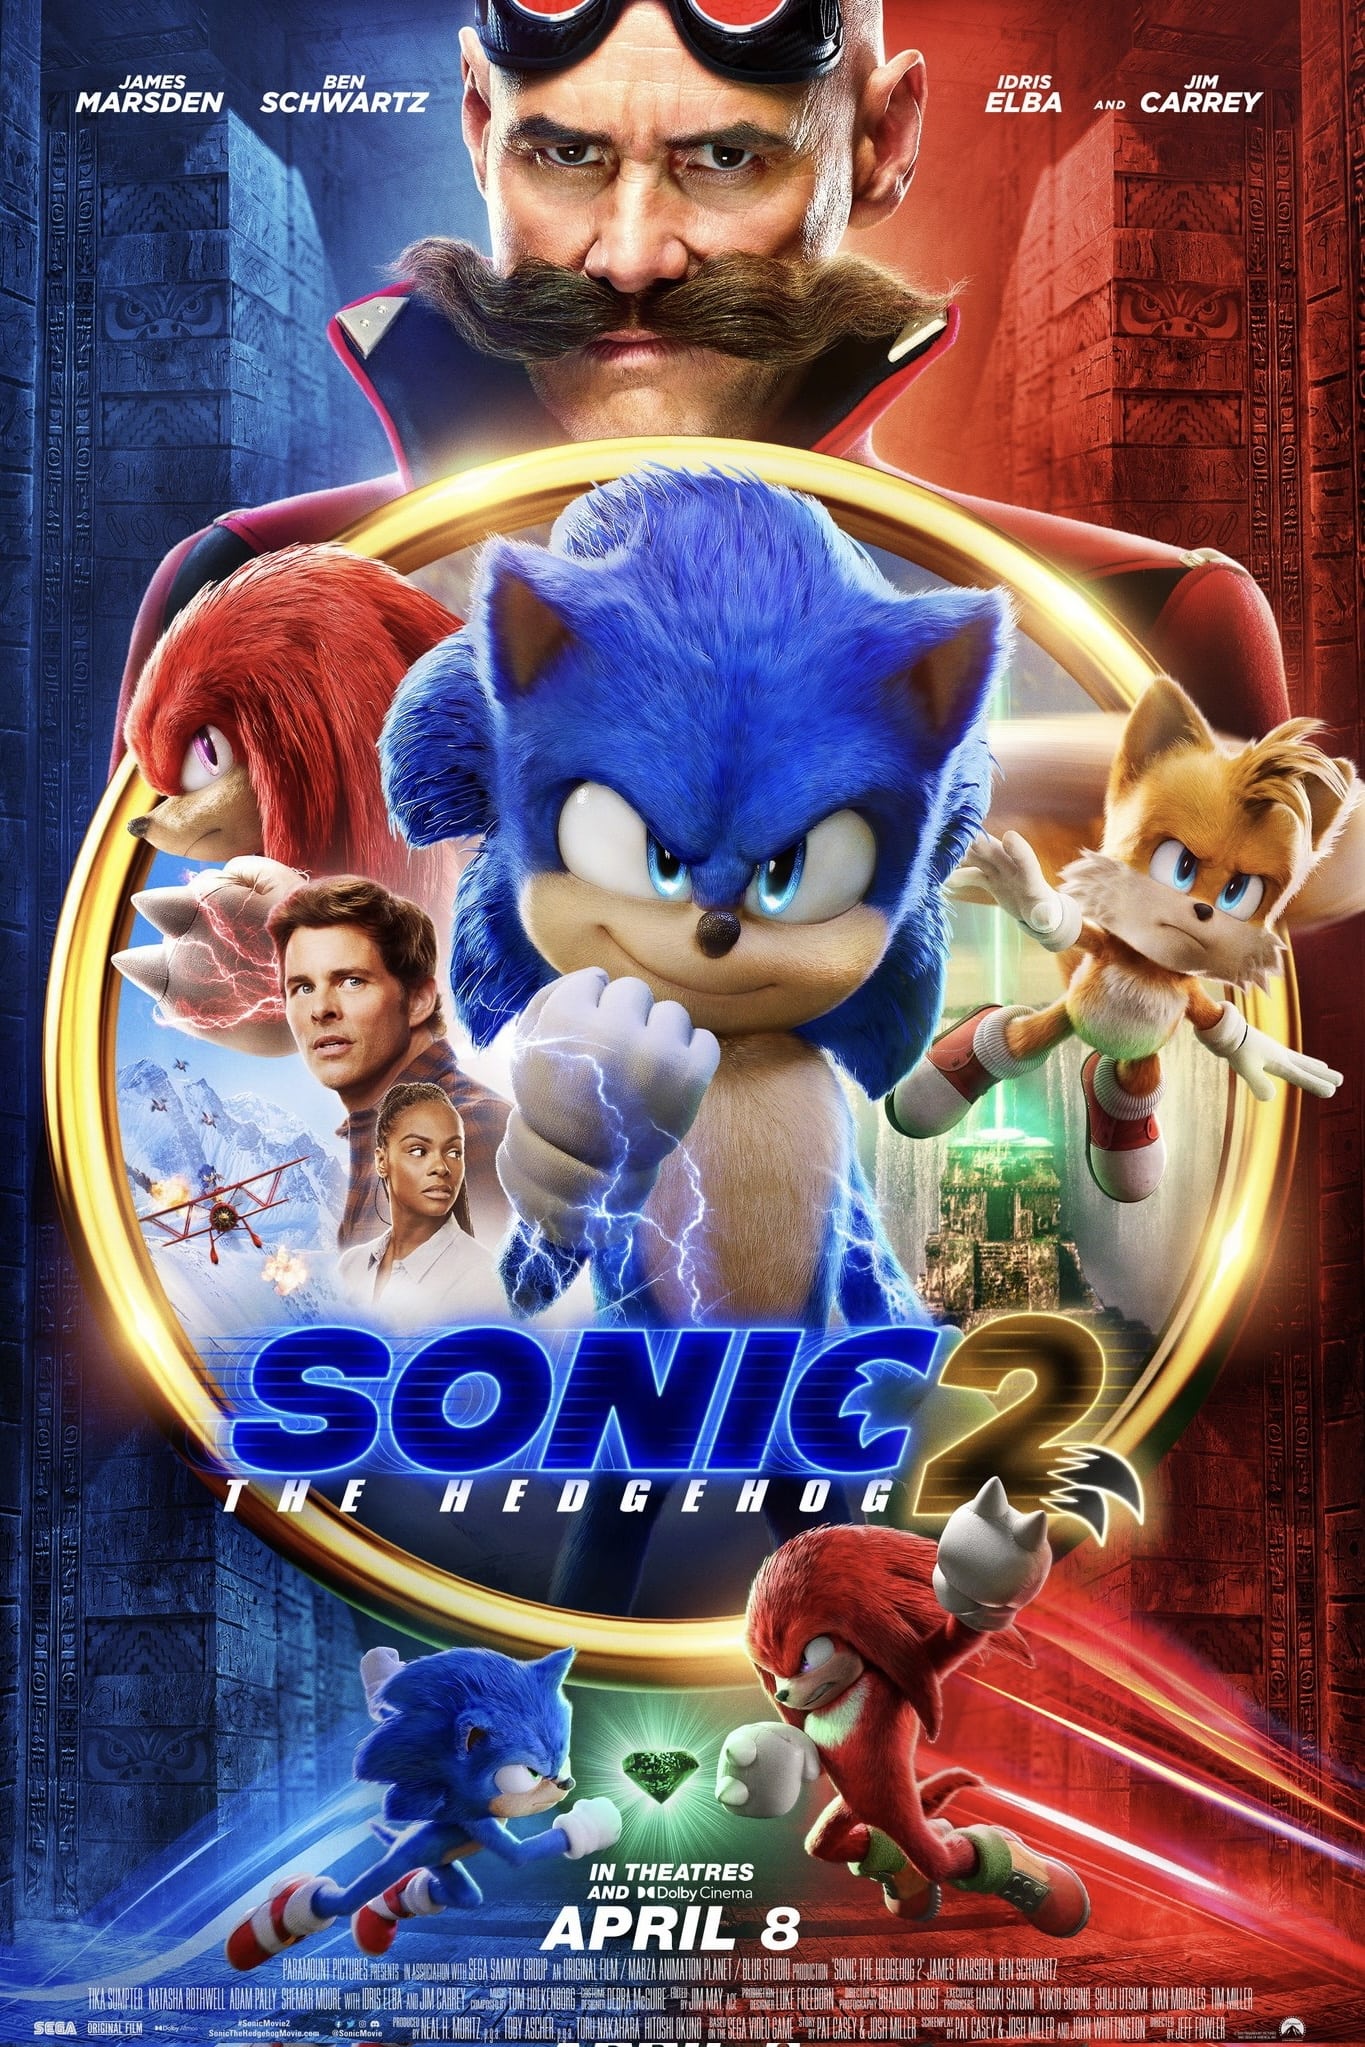 EN - Sonic 2 The Hedgehog 2 (2022) JIM CARREY